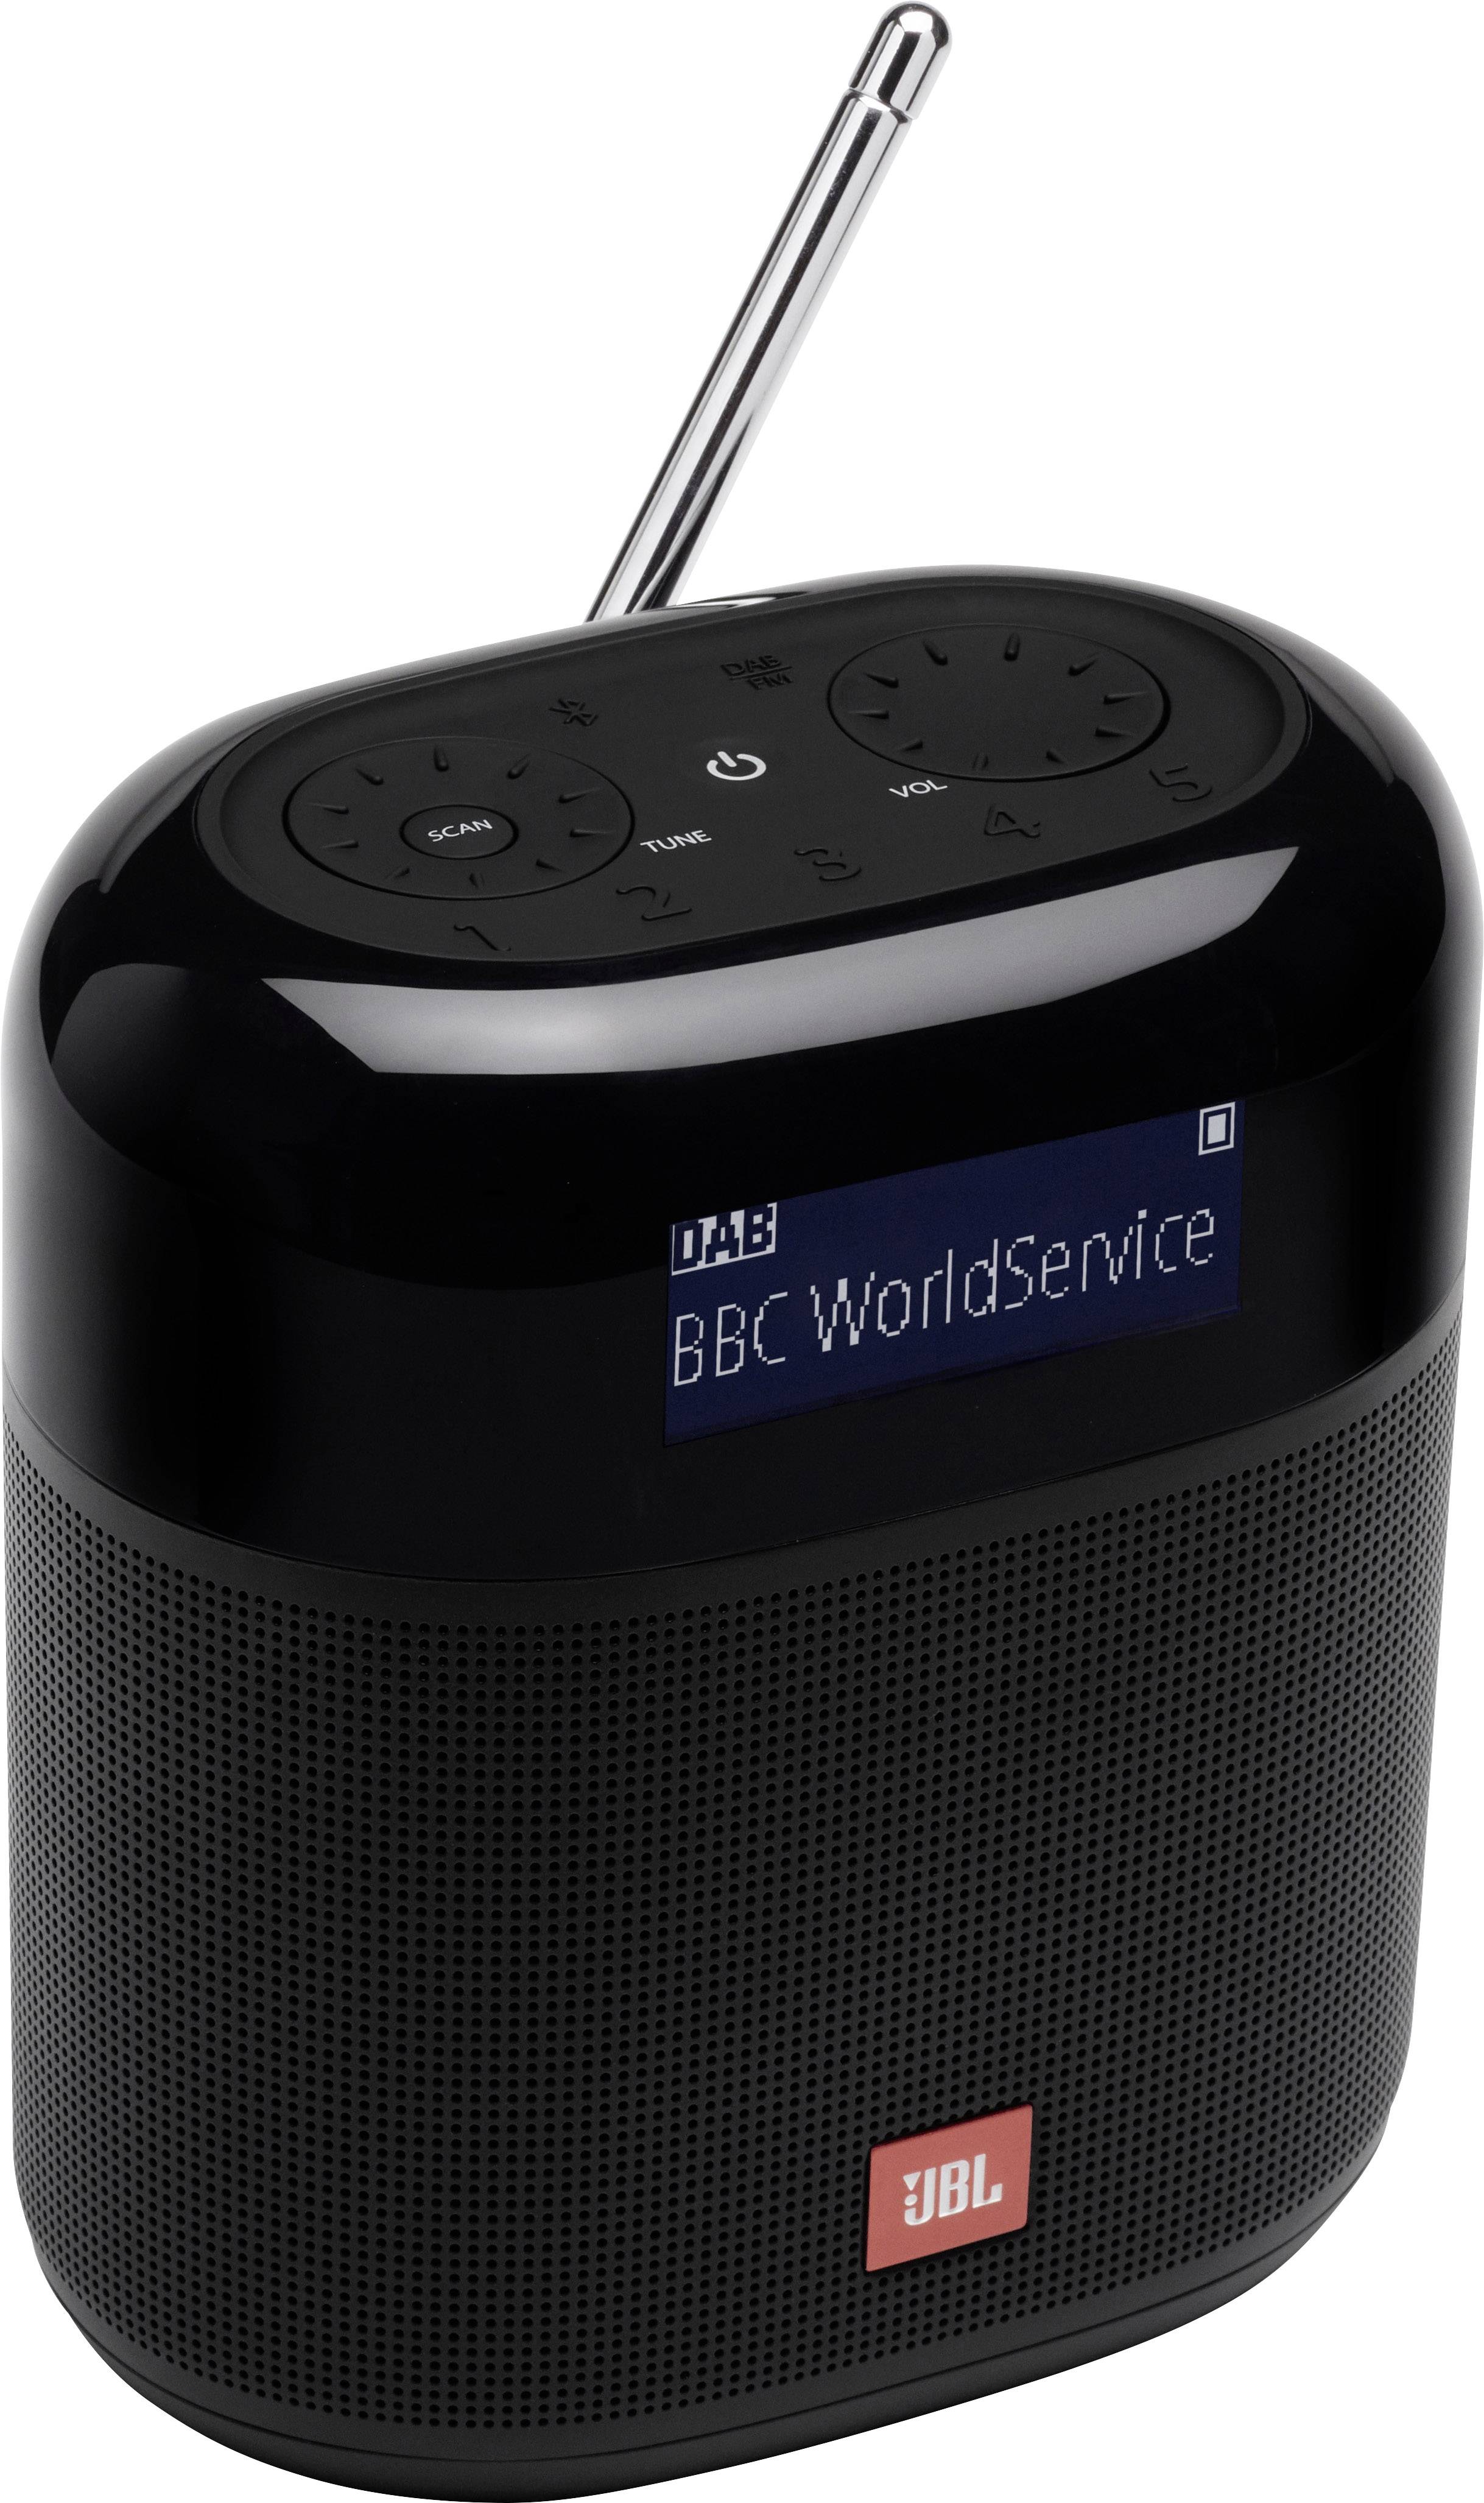 JBL XL Bluetooth radio, spray-proof Black | Conrad.com